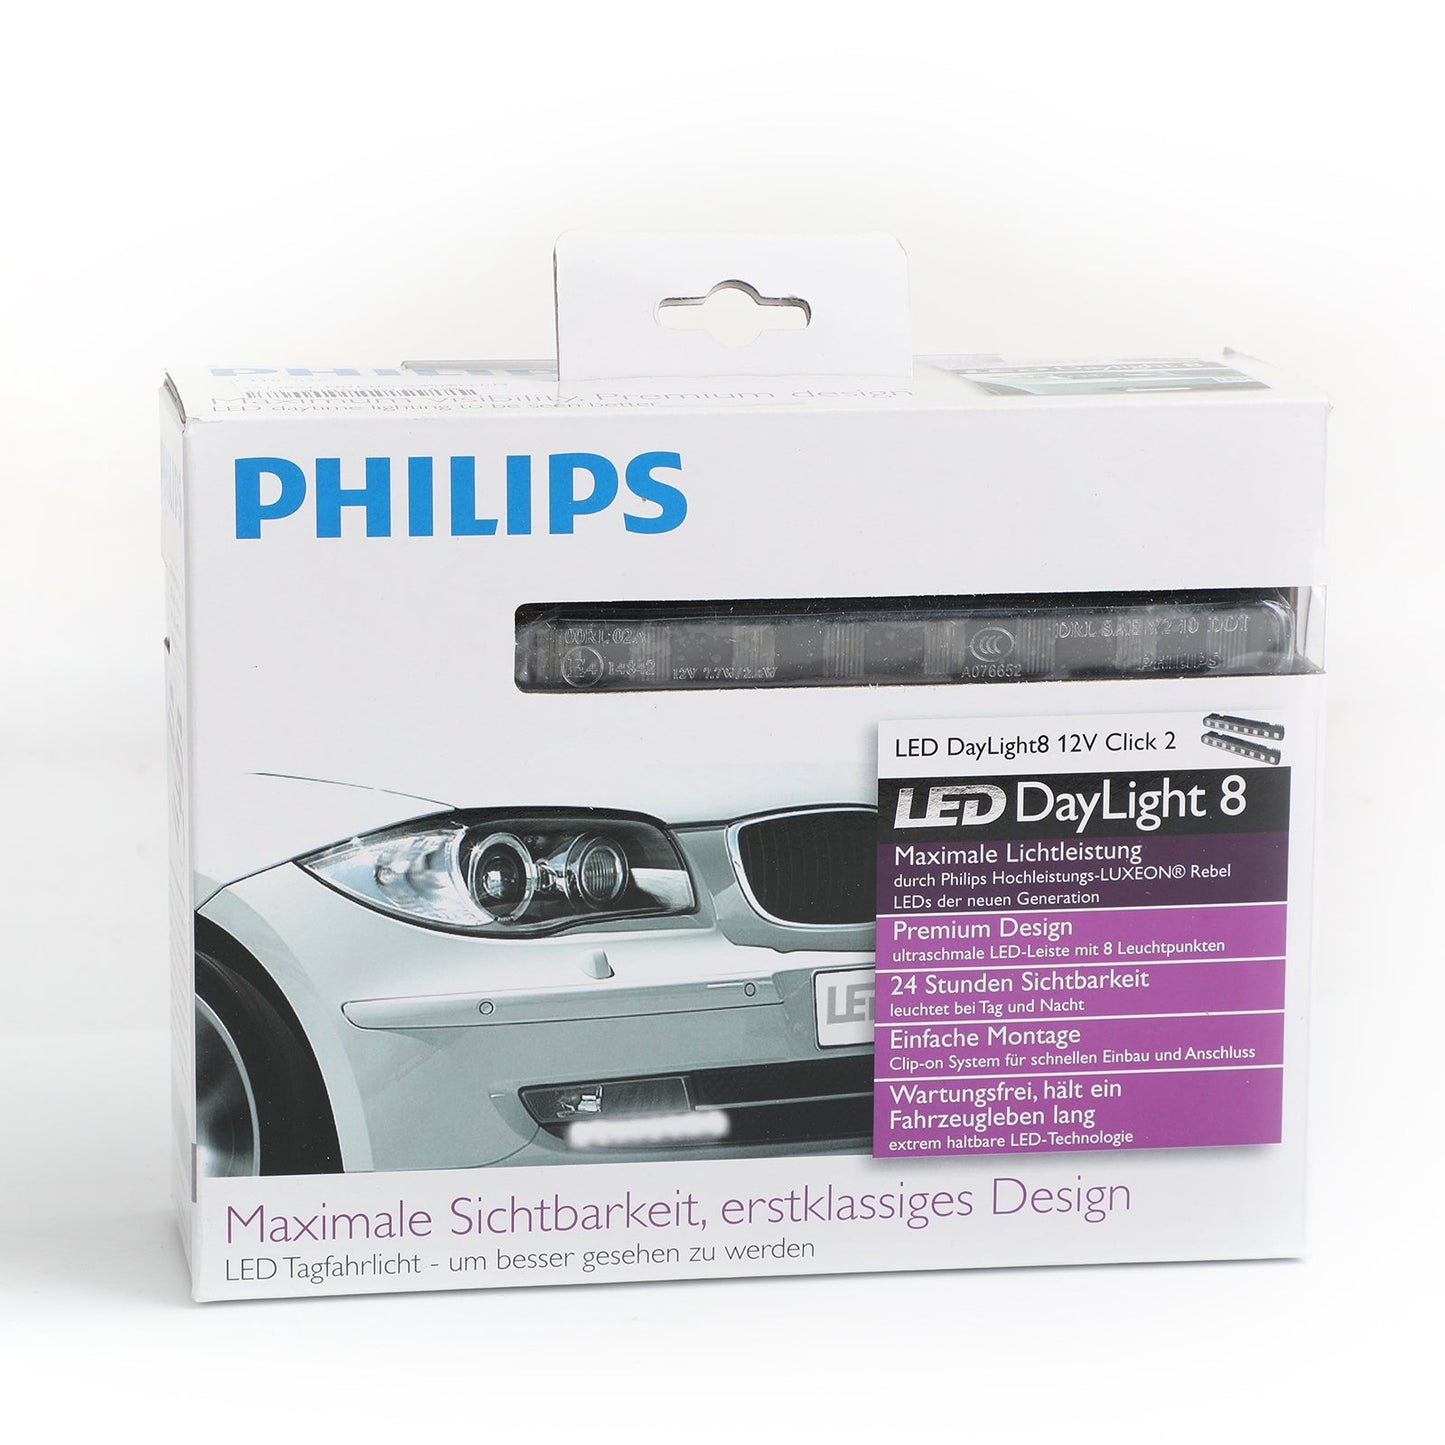 PHILIPS Luxeon LED DayLight 8 Luce di marcia diurna DRL Lampada 12824 12V Generico